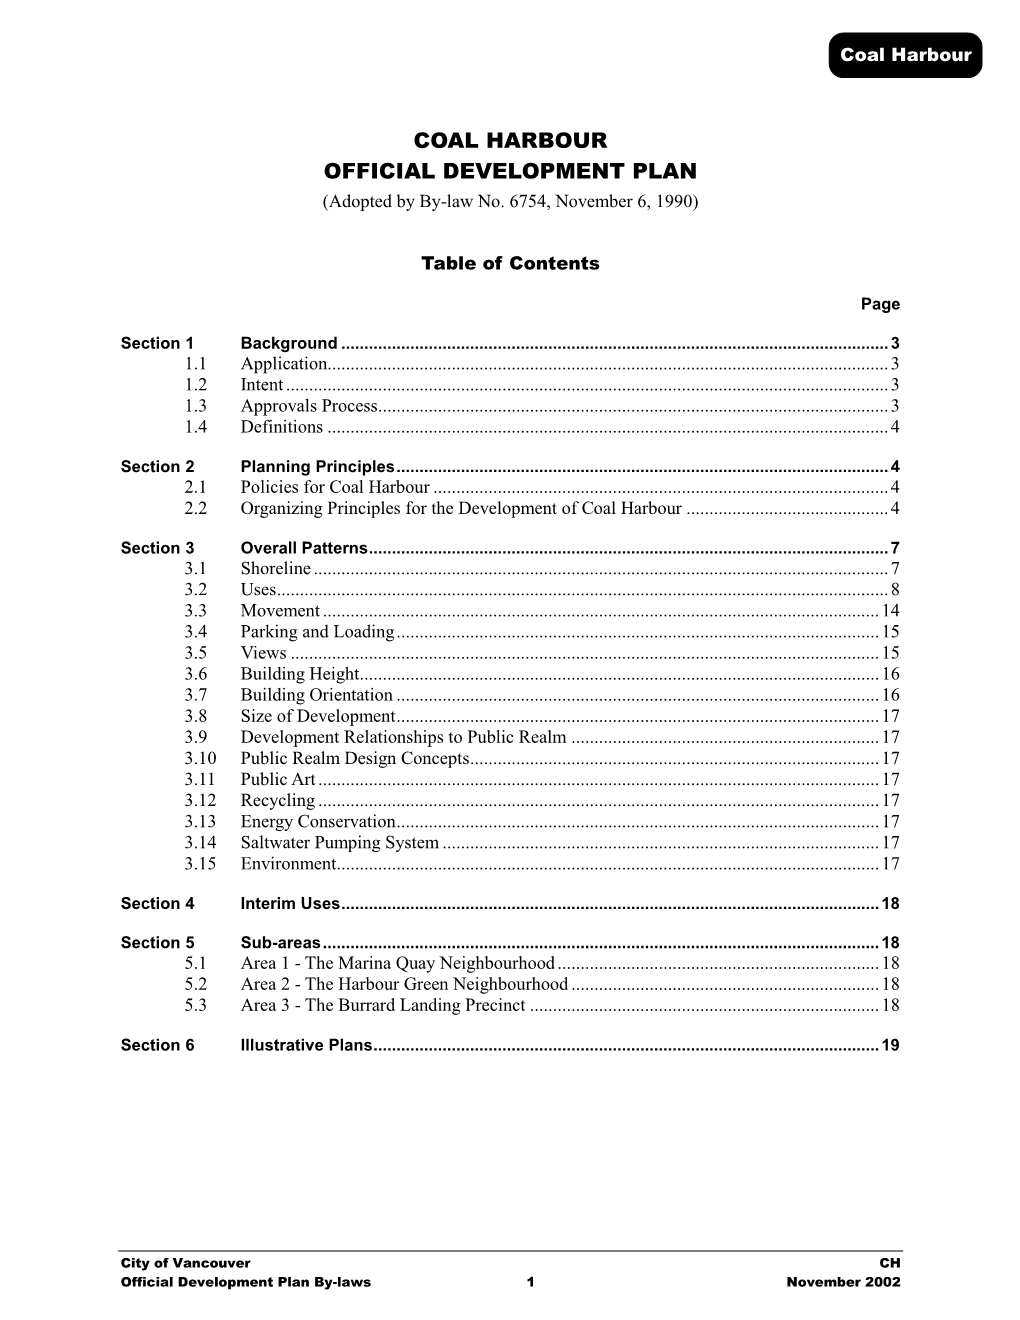 Official Development Plan By-Laws: Coal Harbour